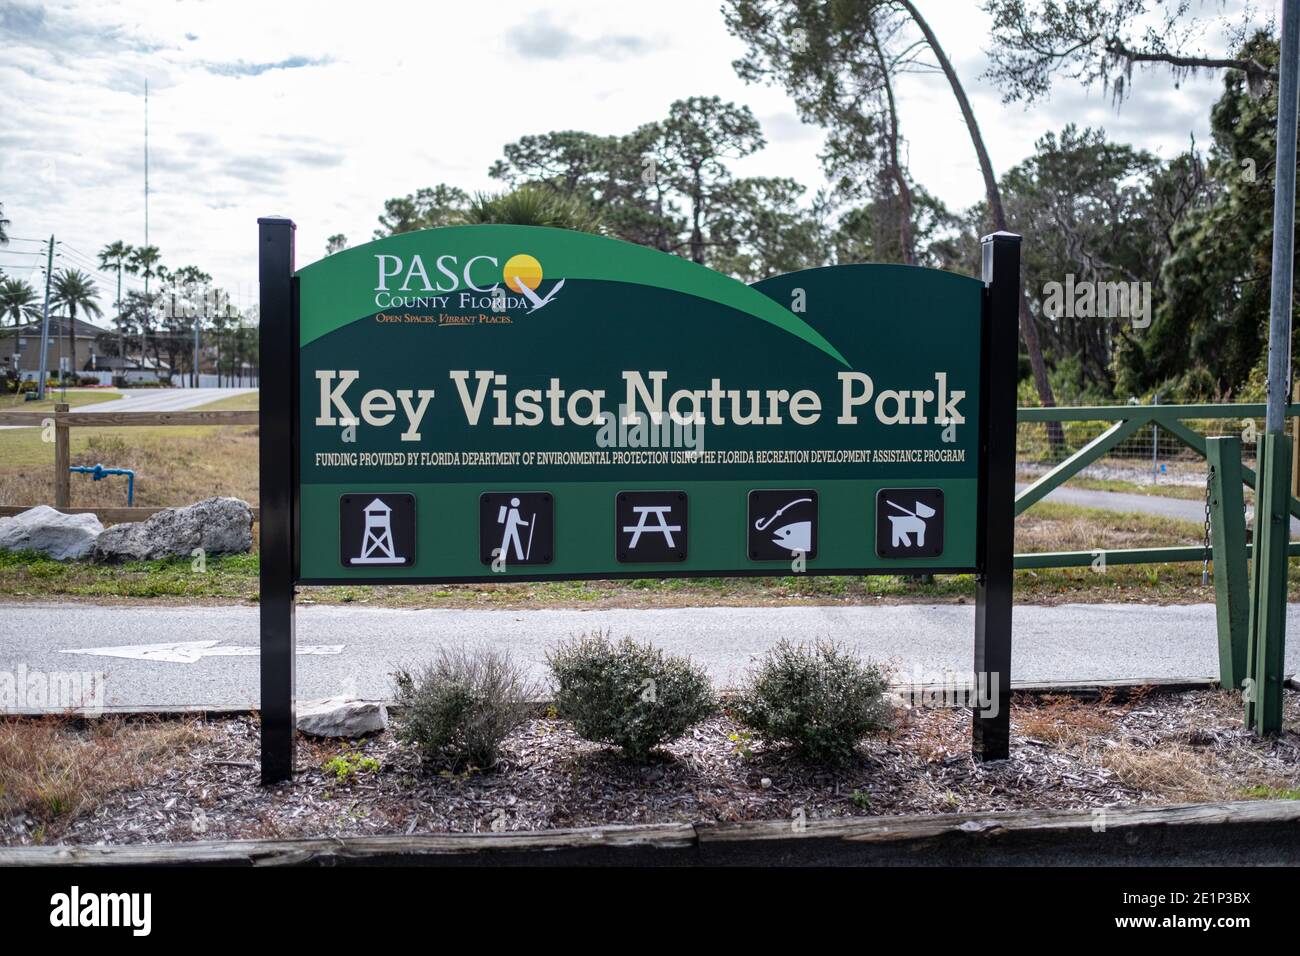 Key Vista Nature Park - Holiday, Florida Stock Photo